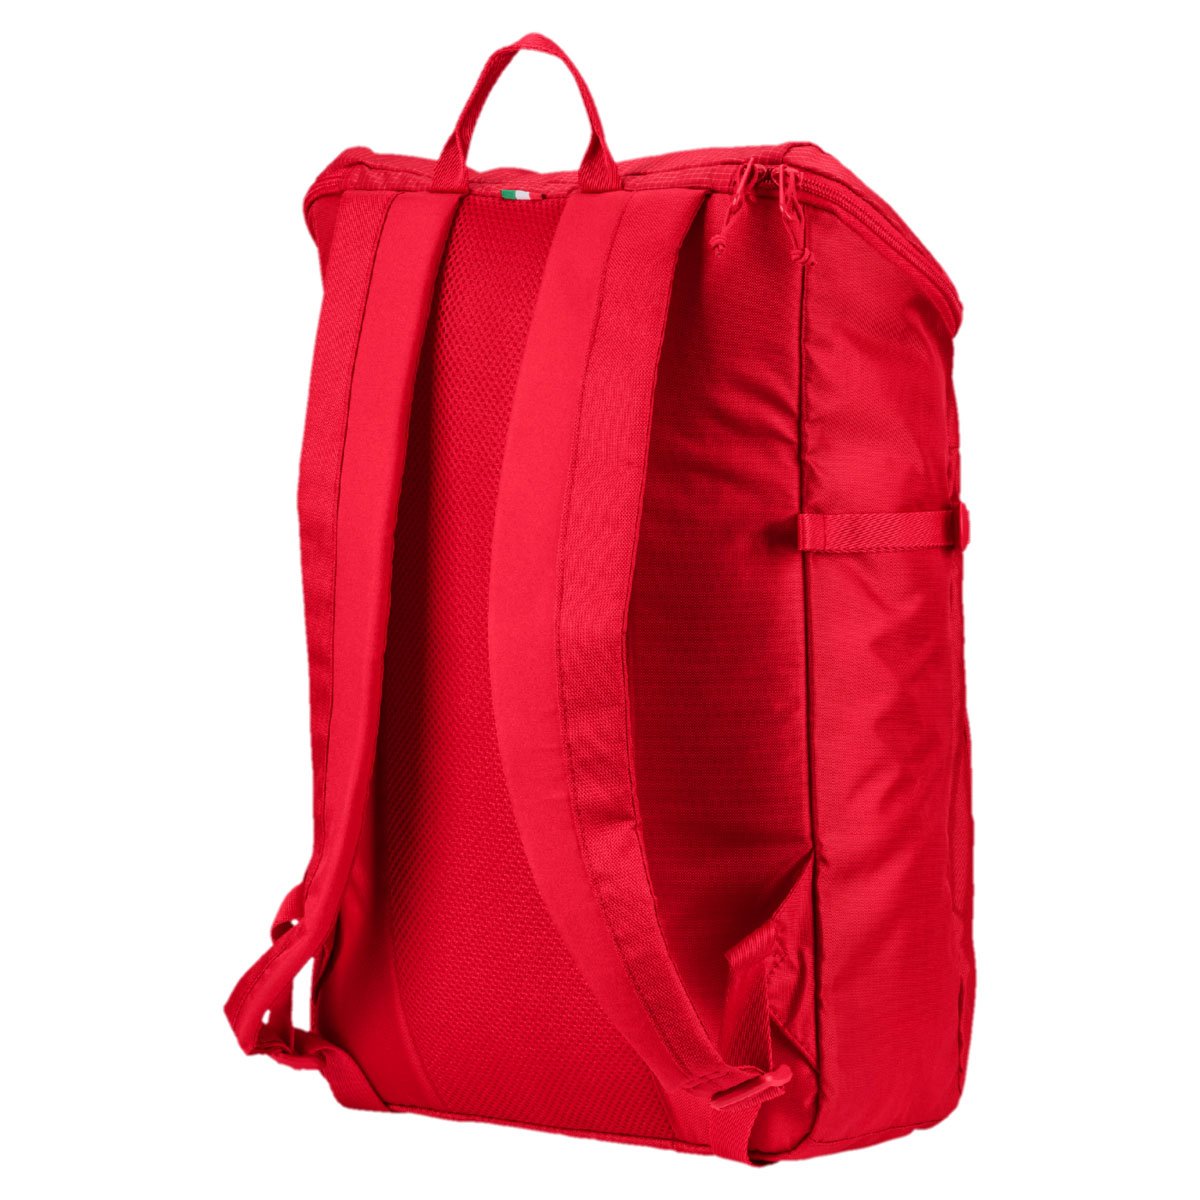 Backpack Unisex Fanwear Ferrari Puma